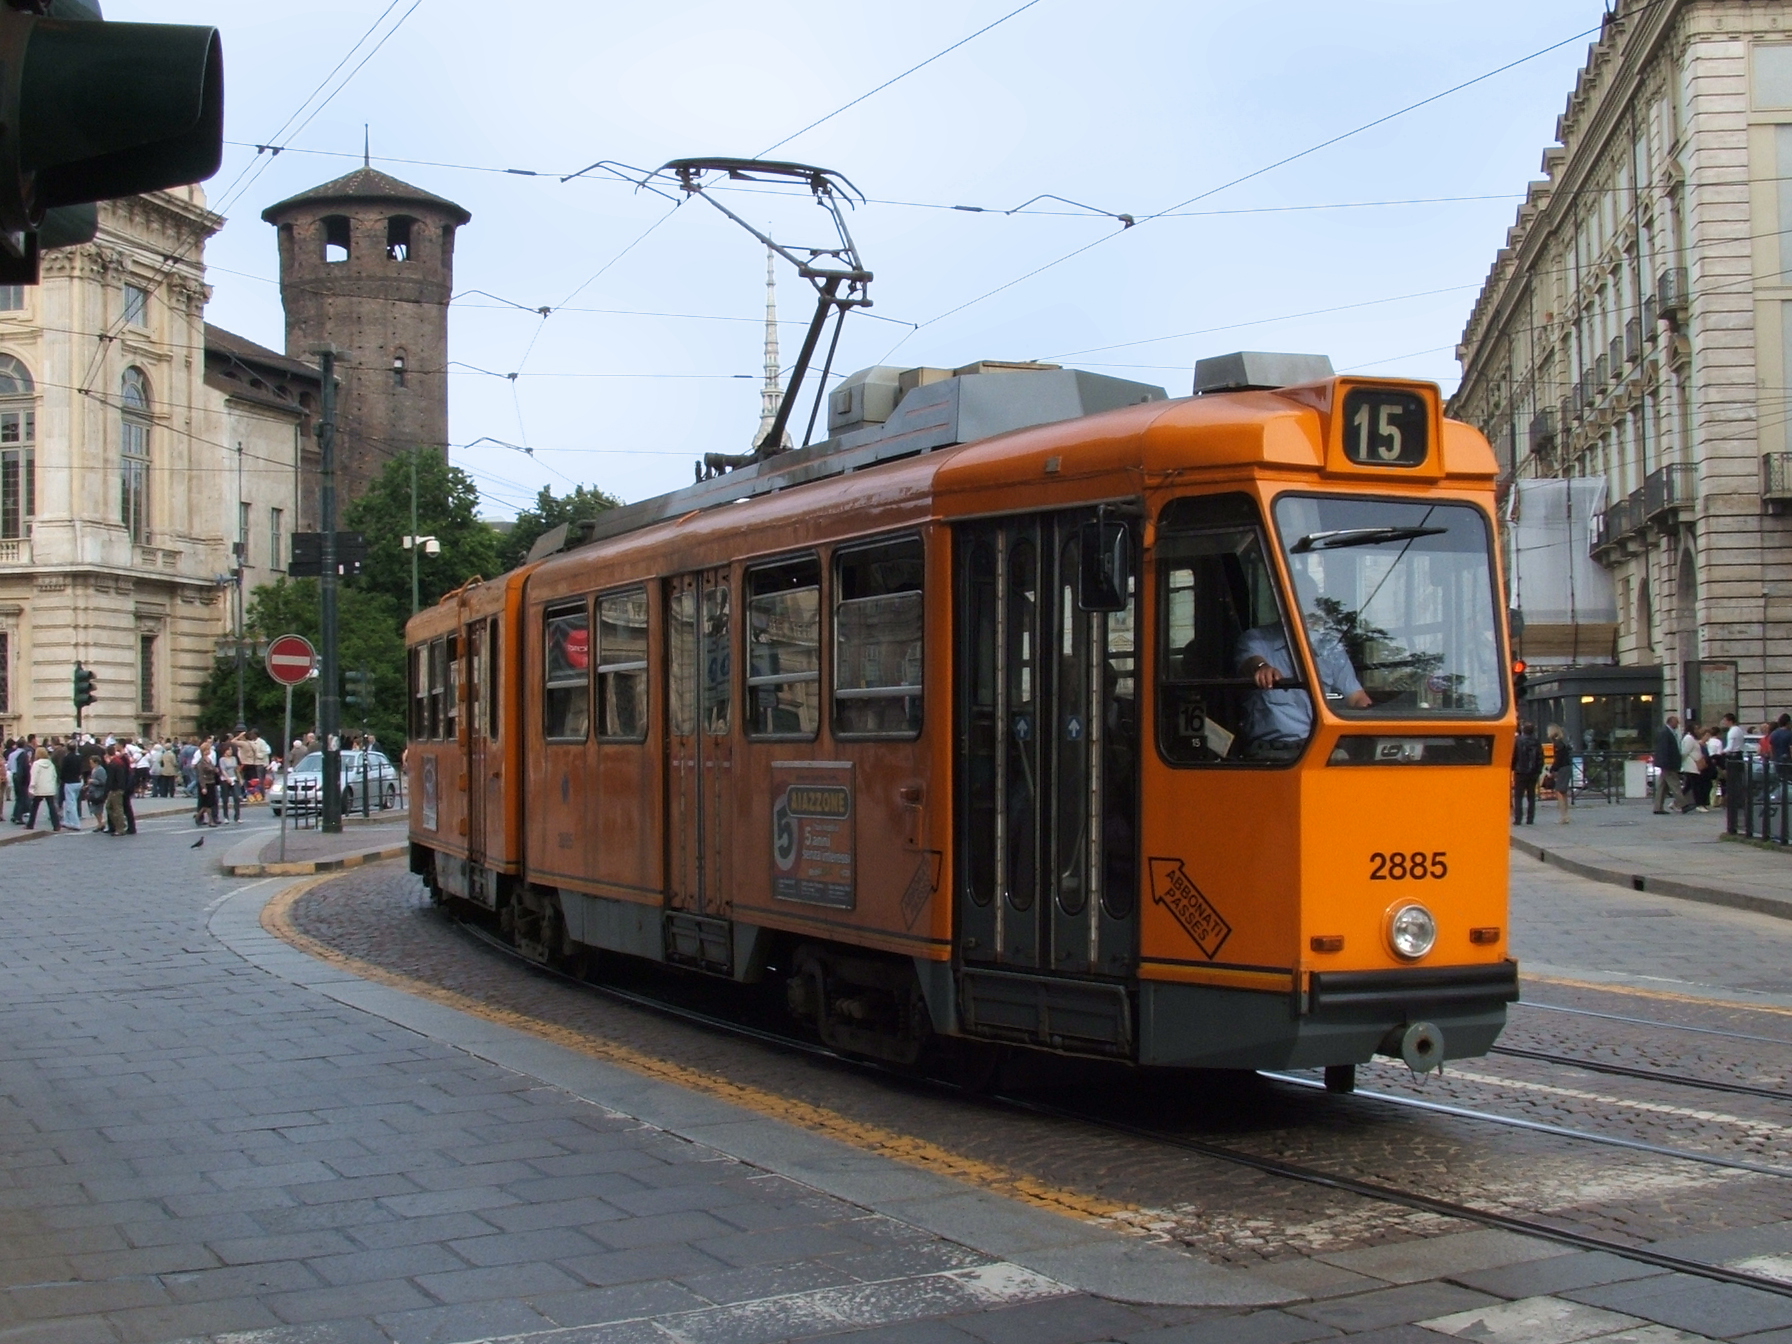 Gtt, a Torino saranno 44 le fermate tagliate: individuate le linee interessate